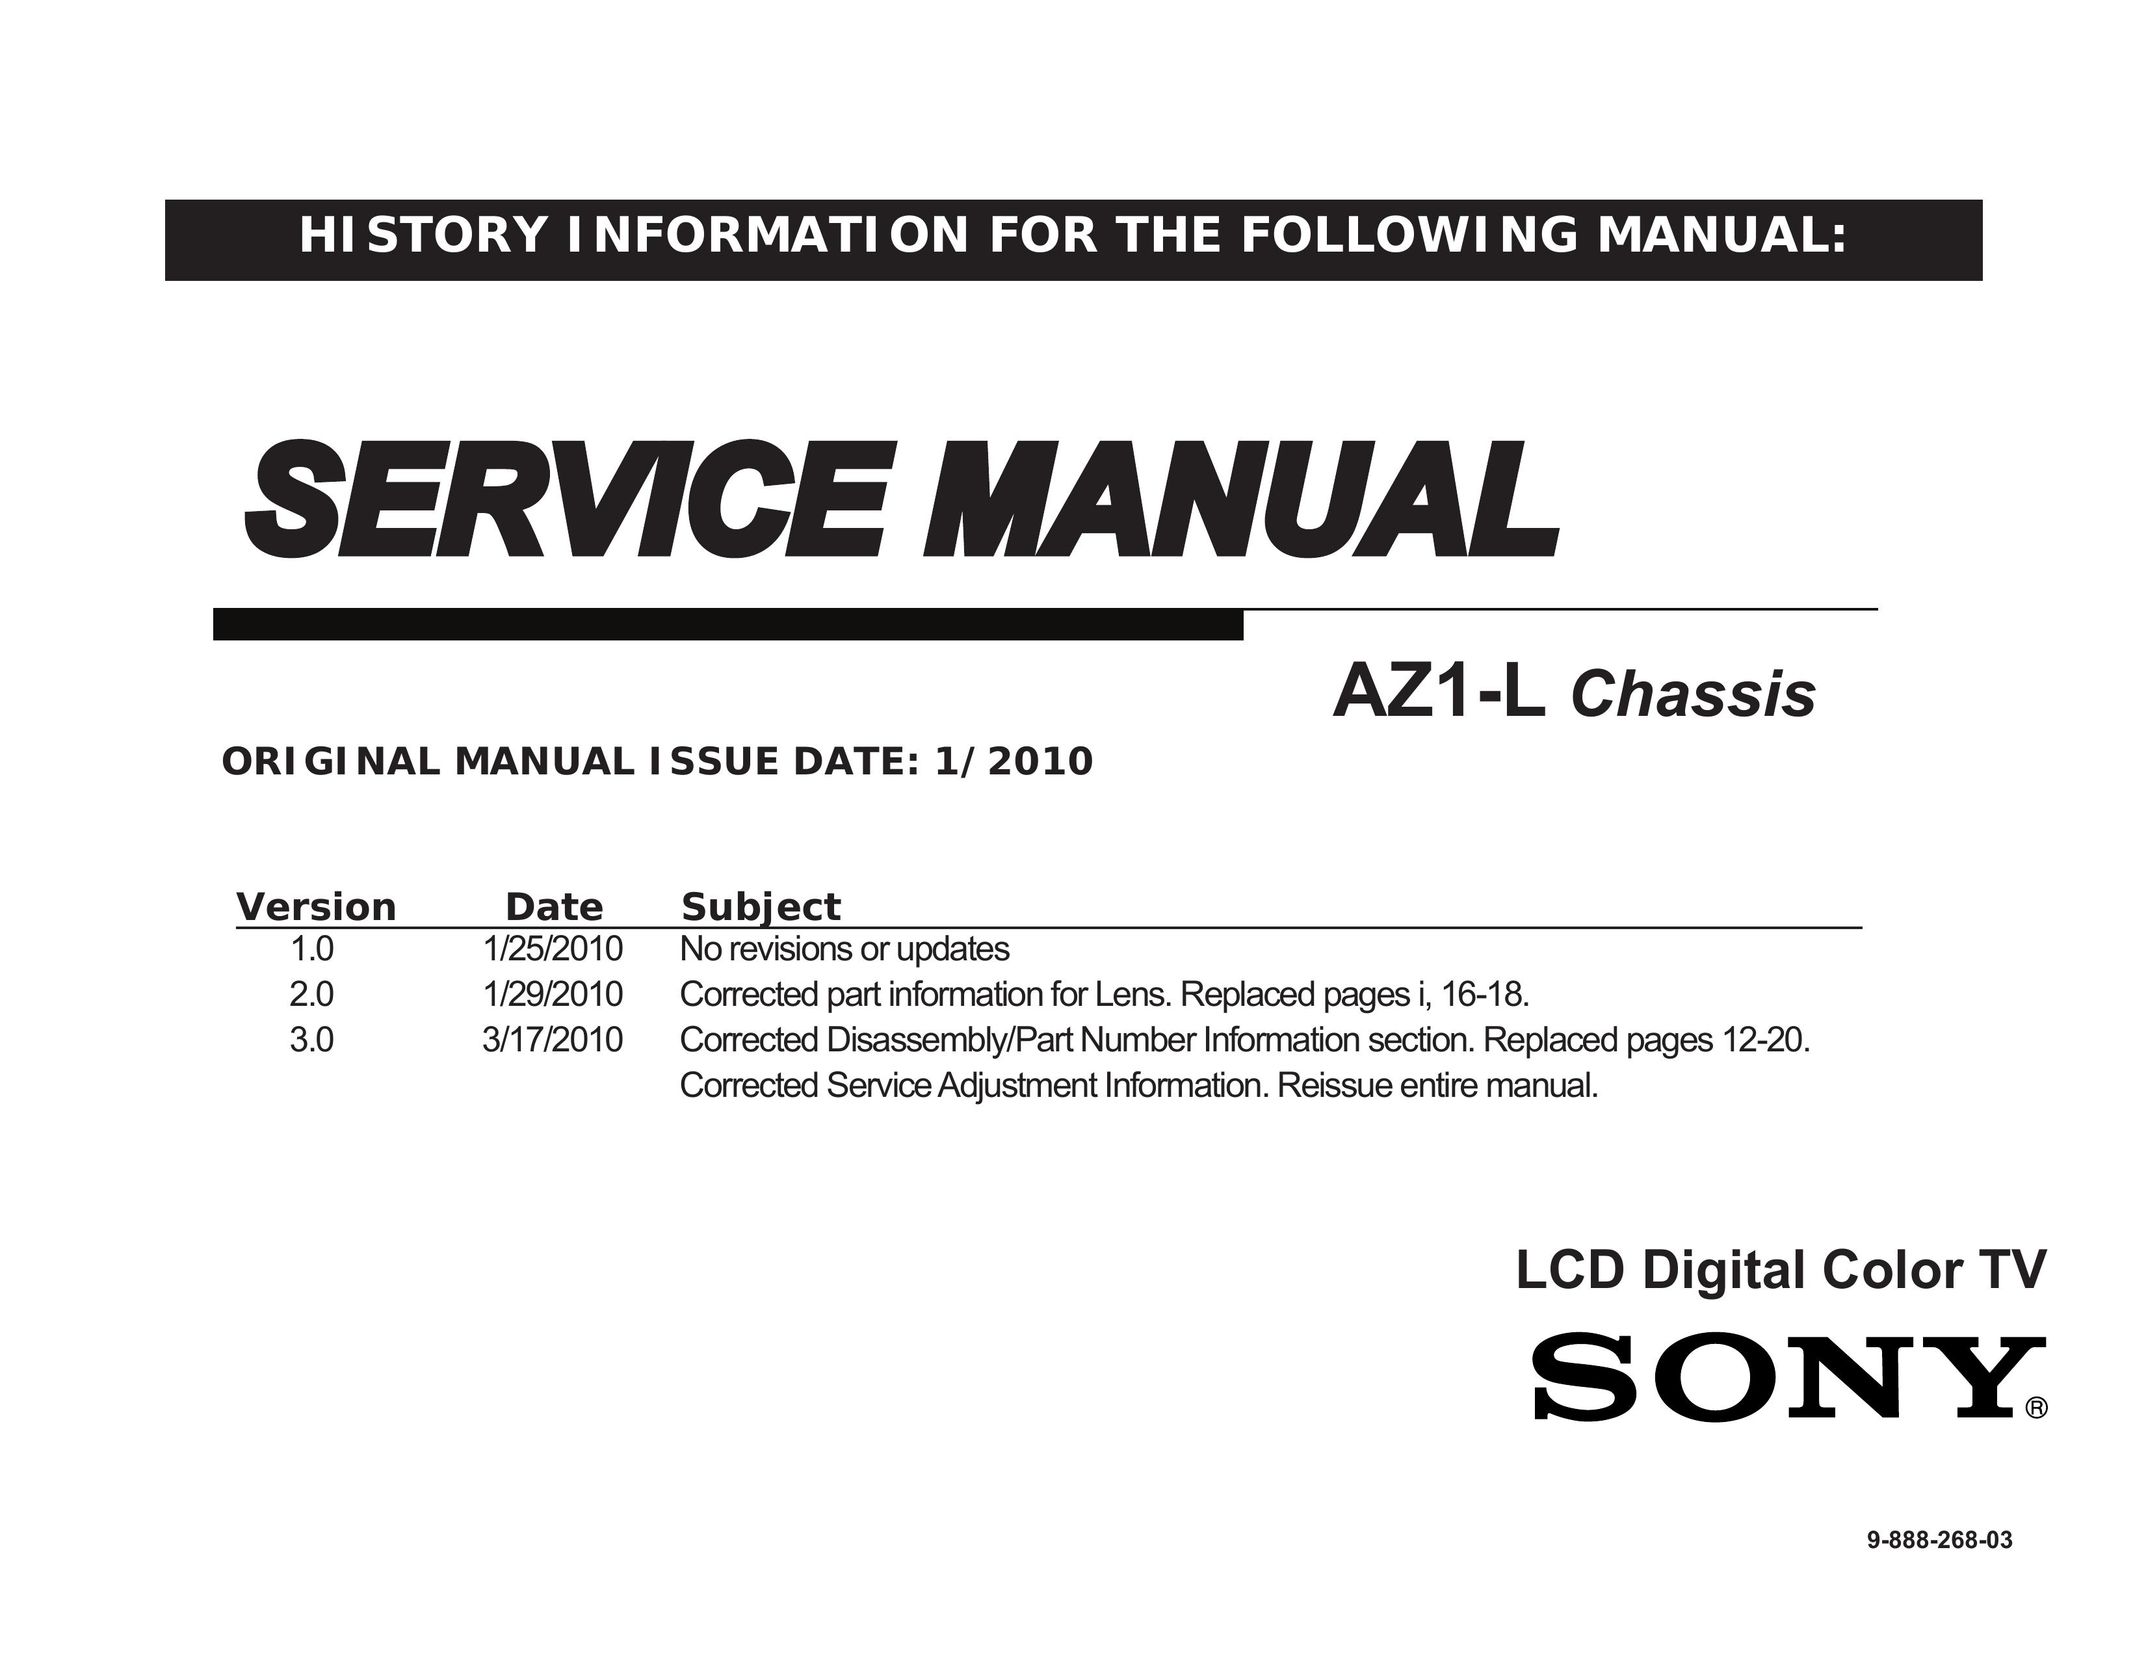 Sony 40EX700 Car Satellite TV System User Manual